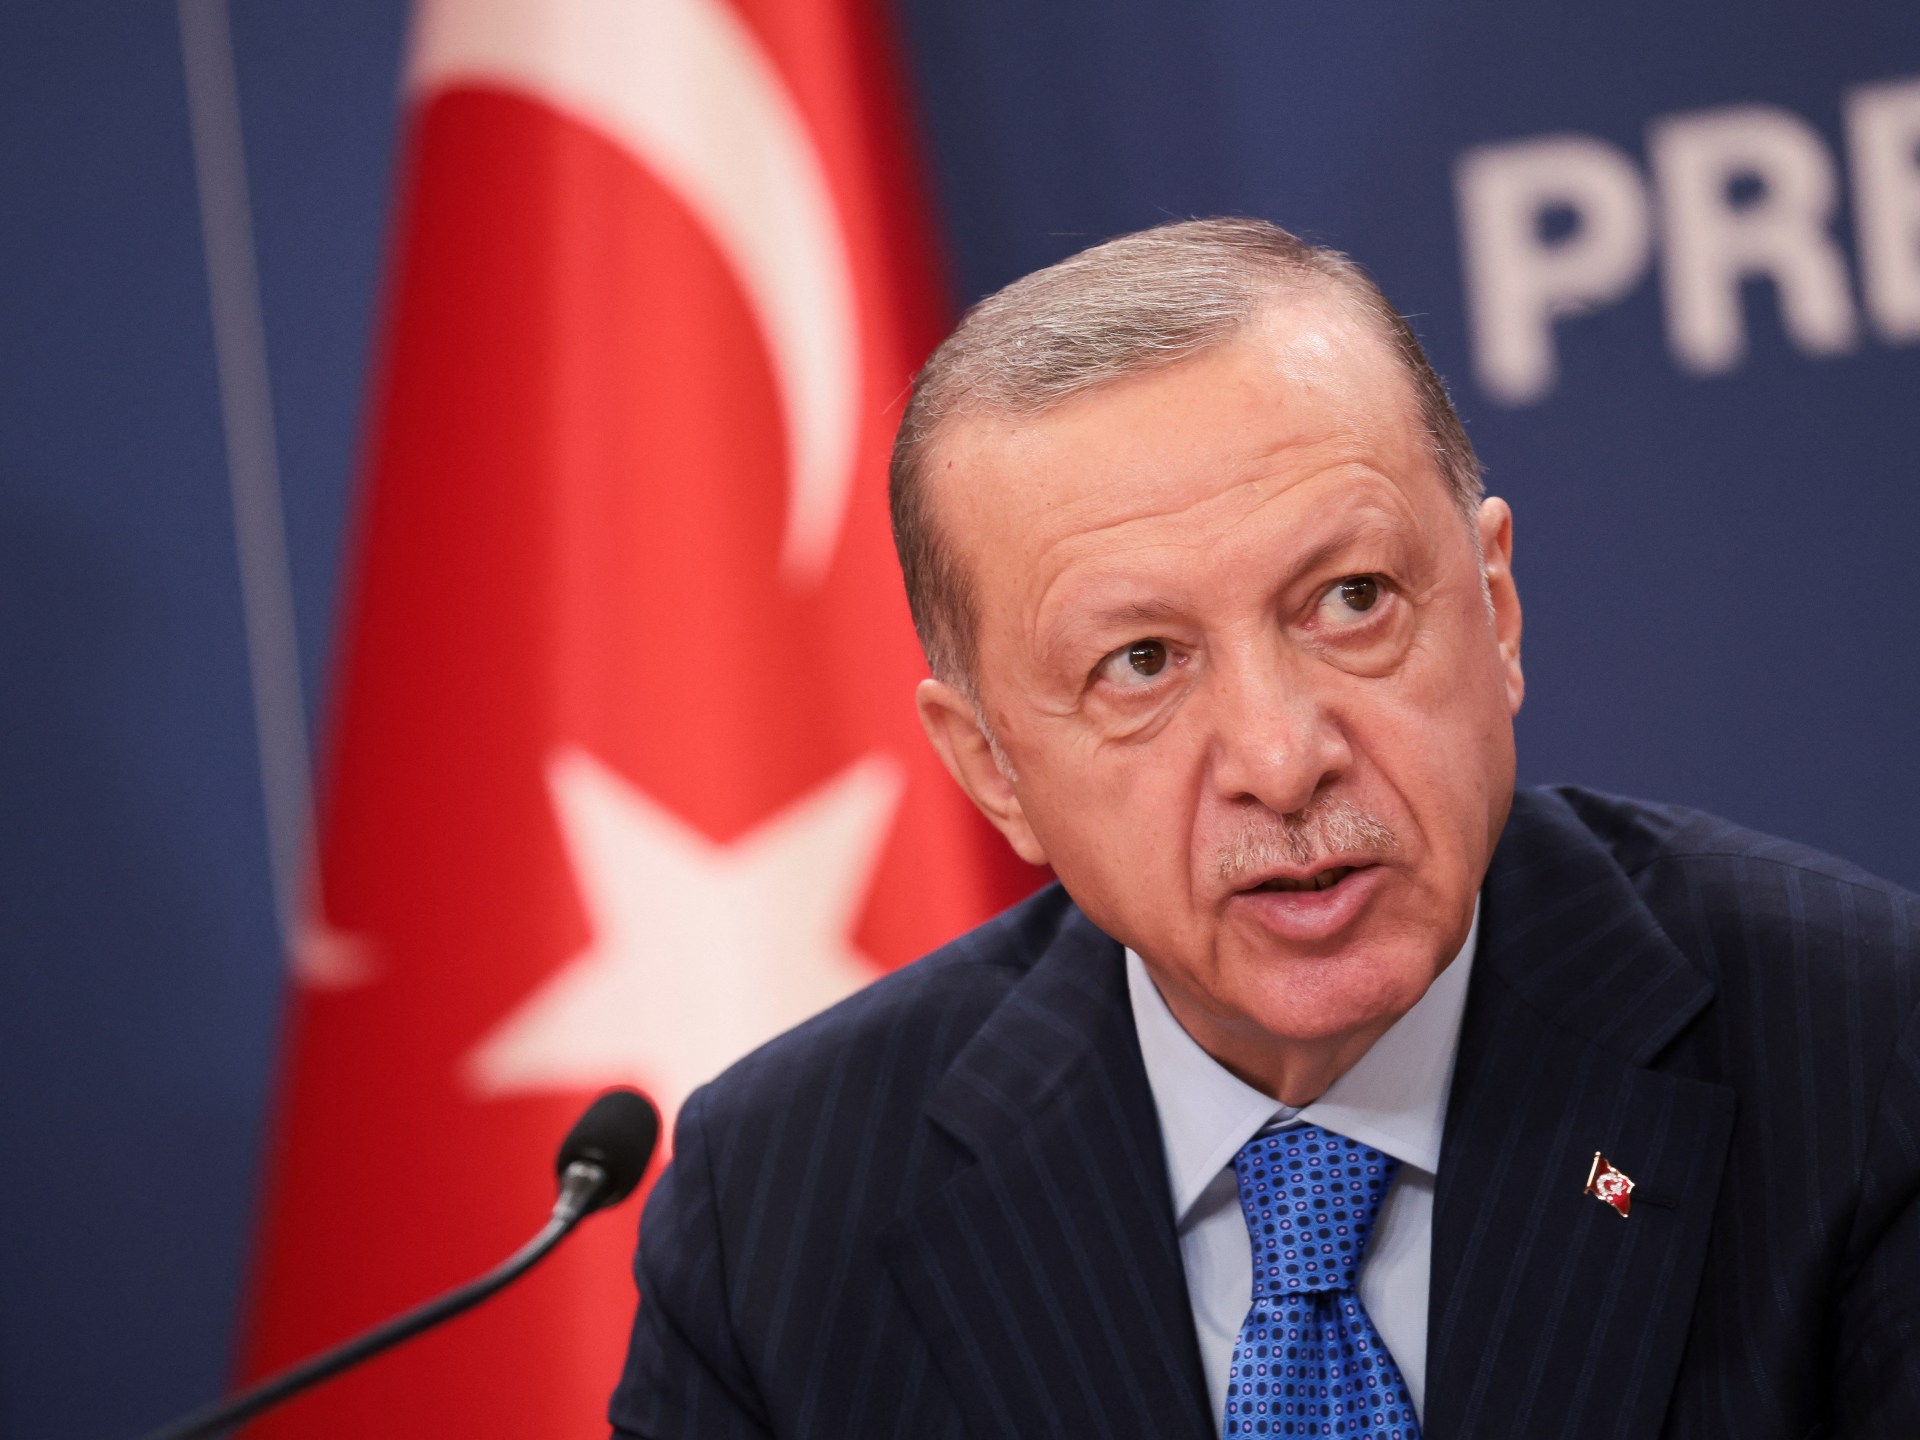 Turkey postpones NATO meeting with Sweden, Finland: State TV - Al Jazeera English